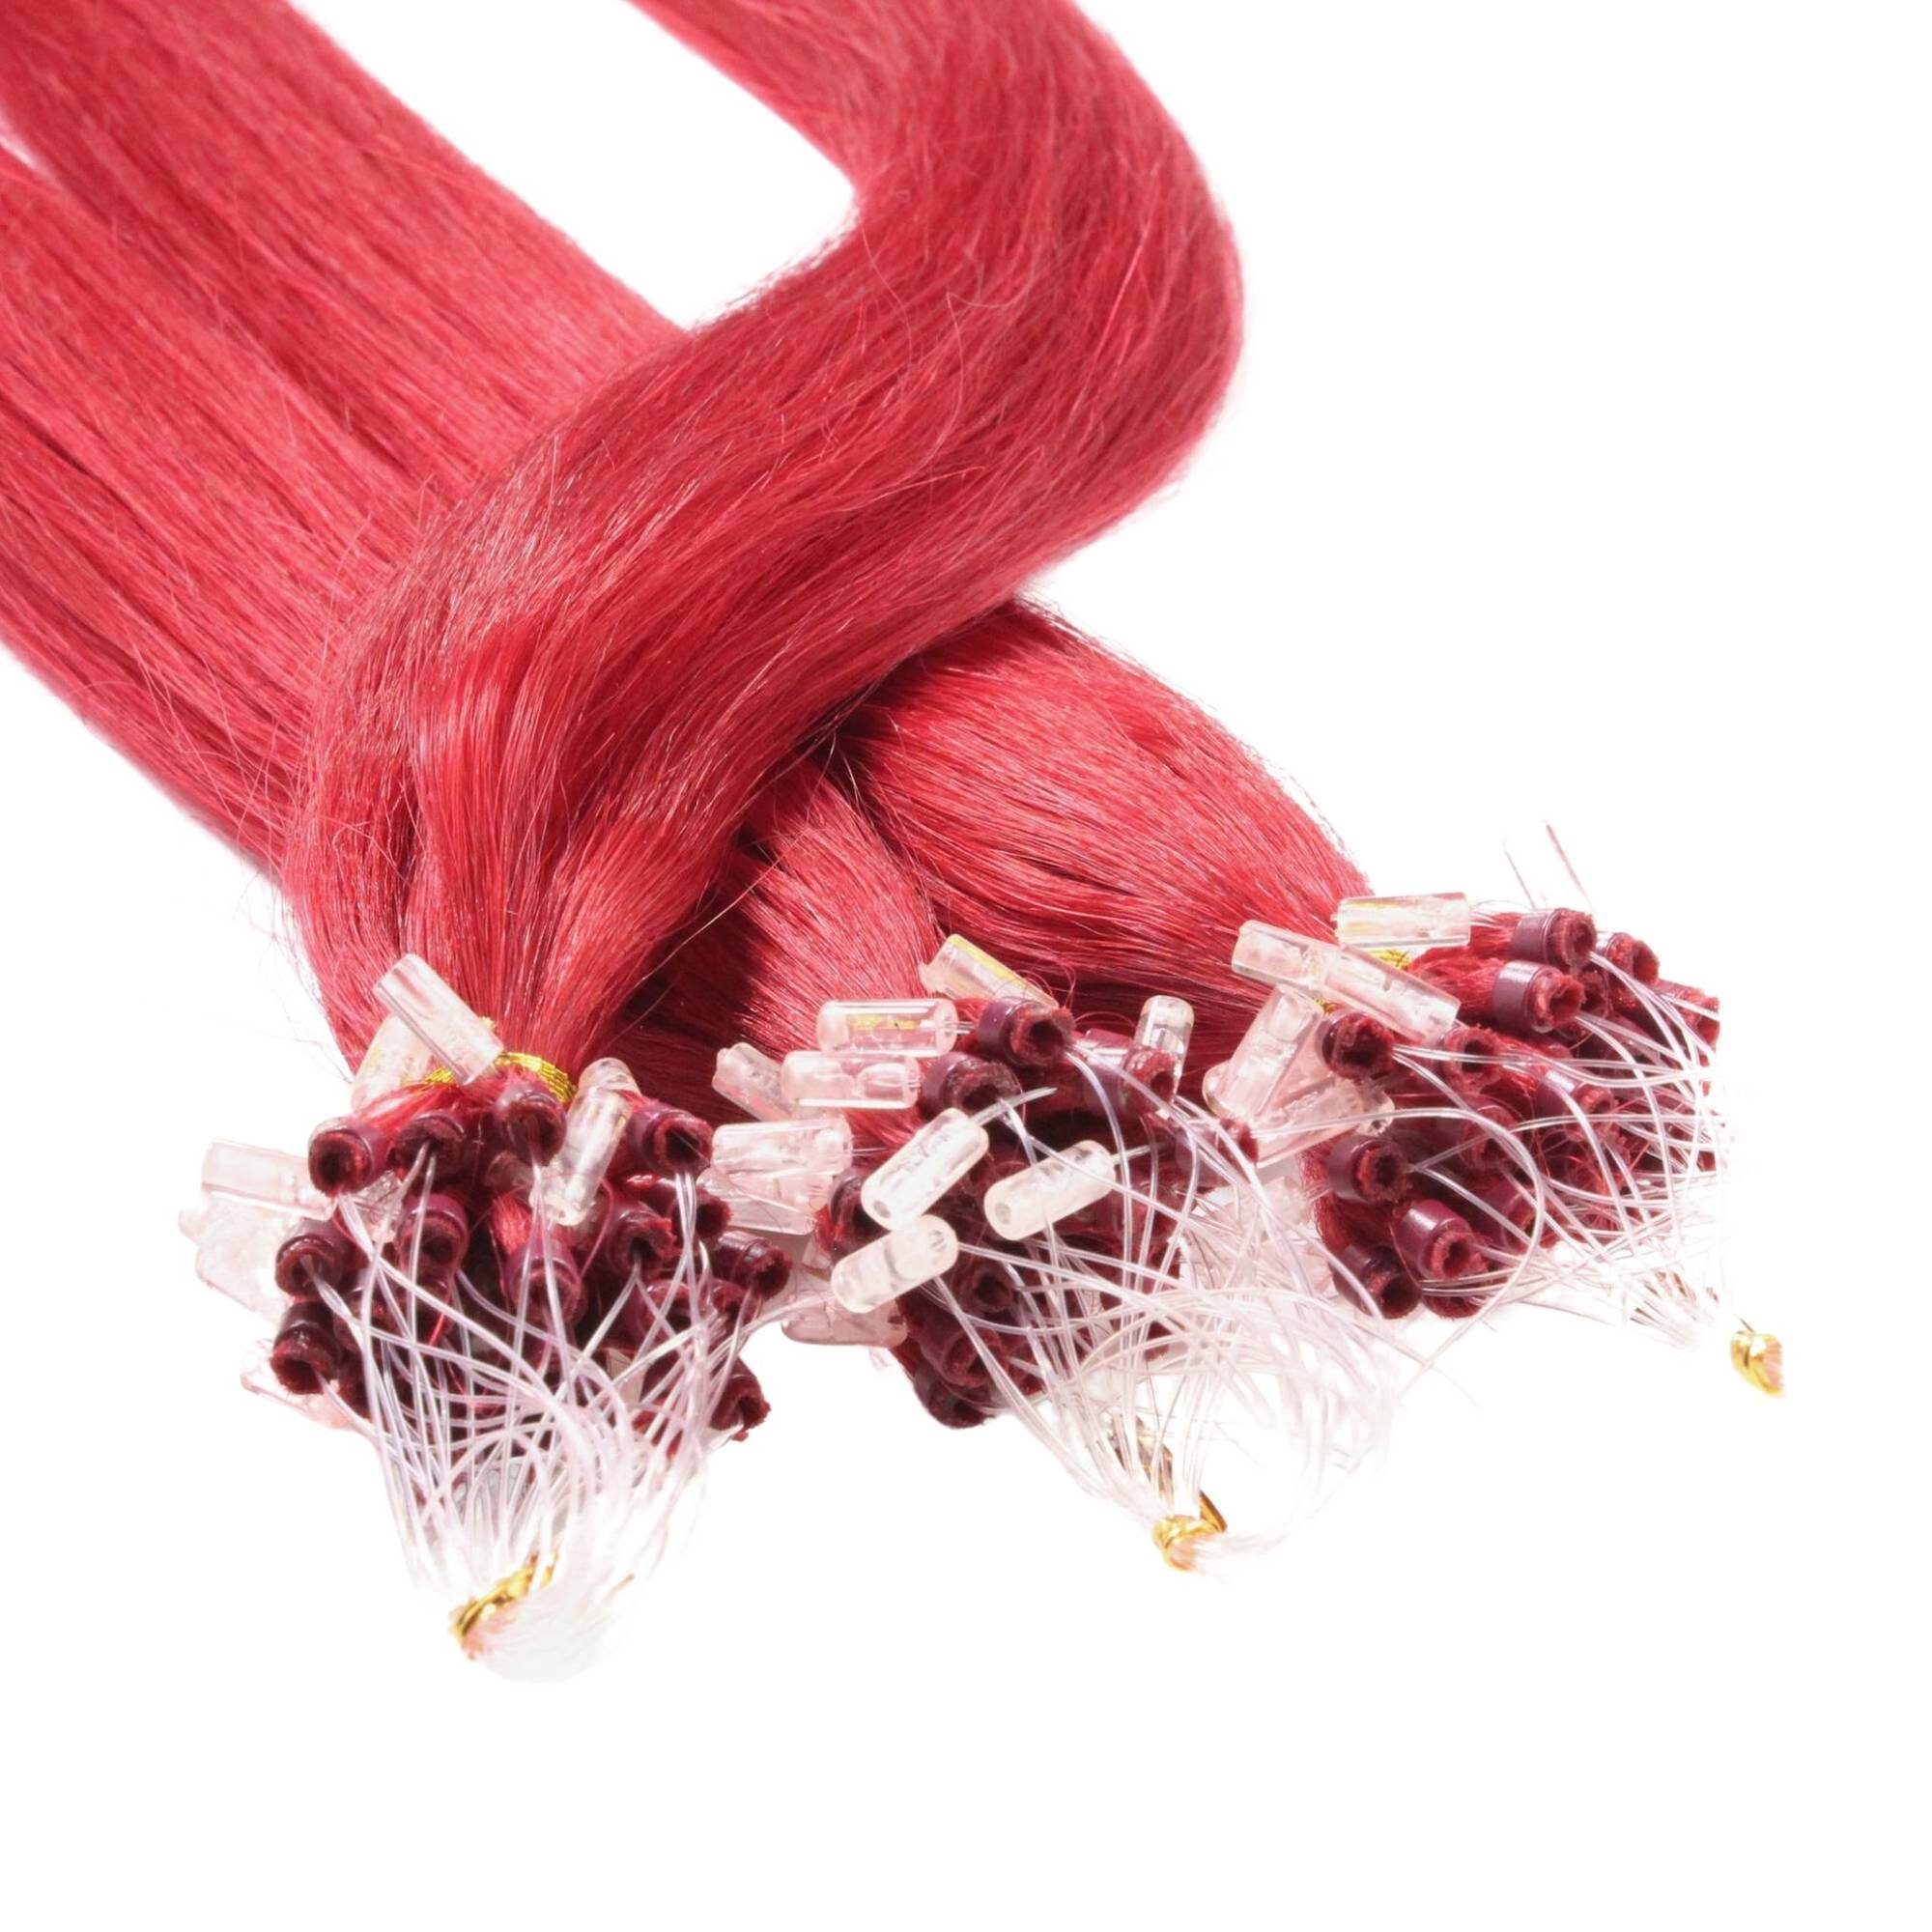 hair2heart Echthaar-Extension Microring Loops - glatt #0/44 Rot-Intensiv 0.5g 40cm